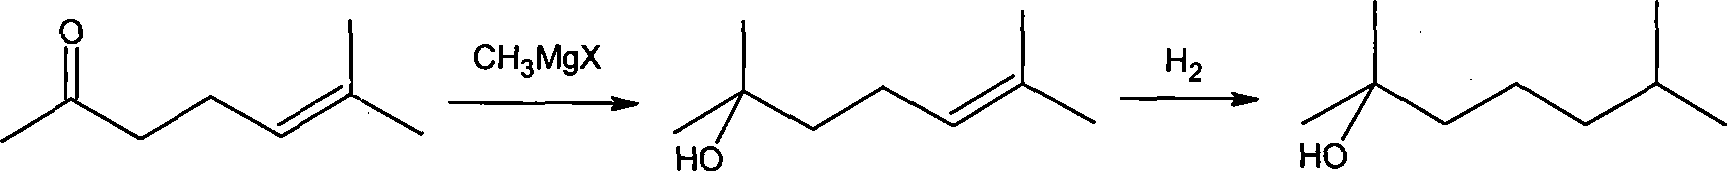 Method for preparing 2,6-dimethyl-2-heptanol